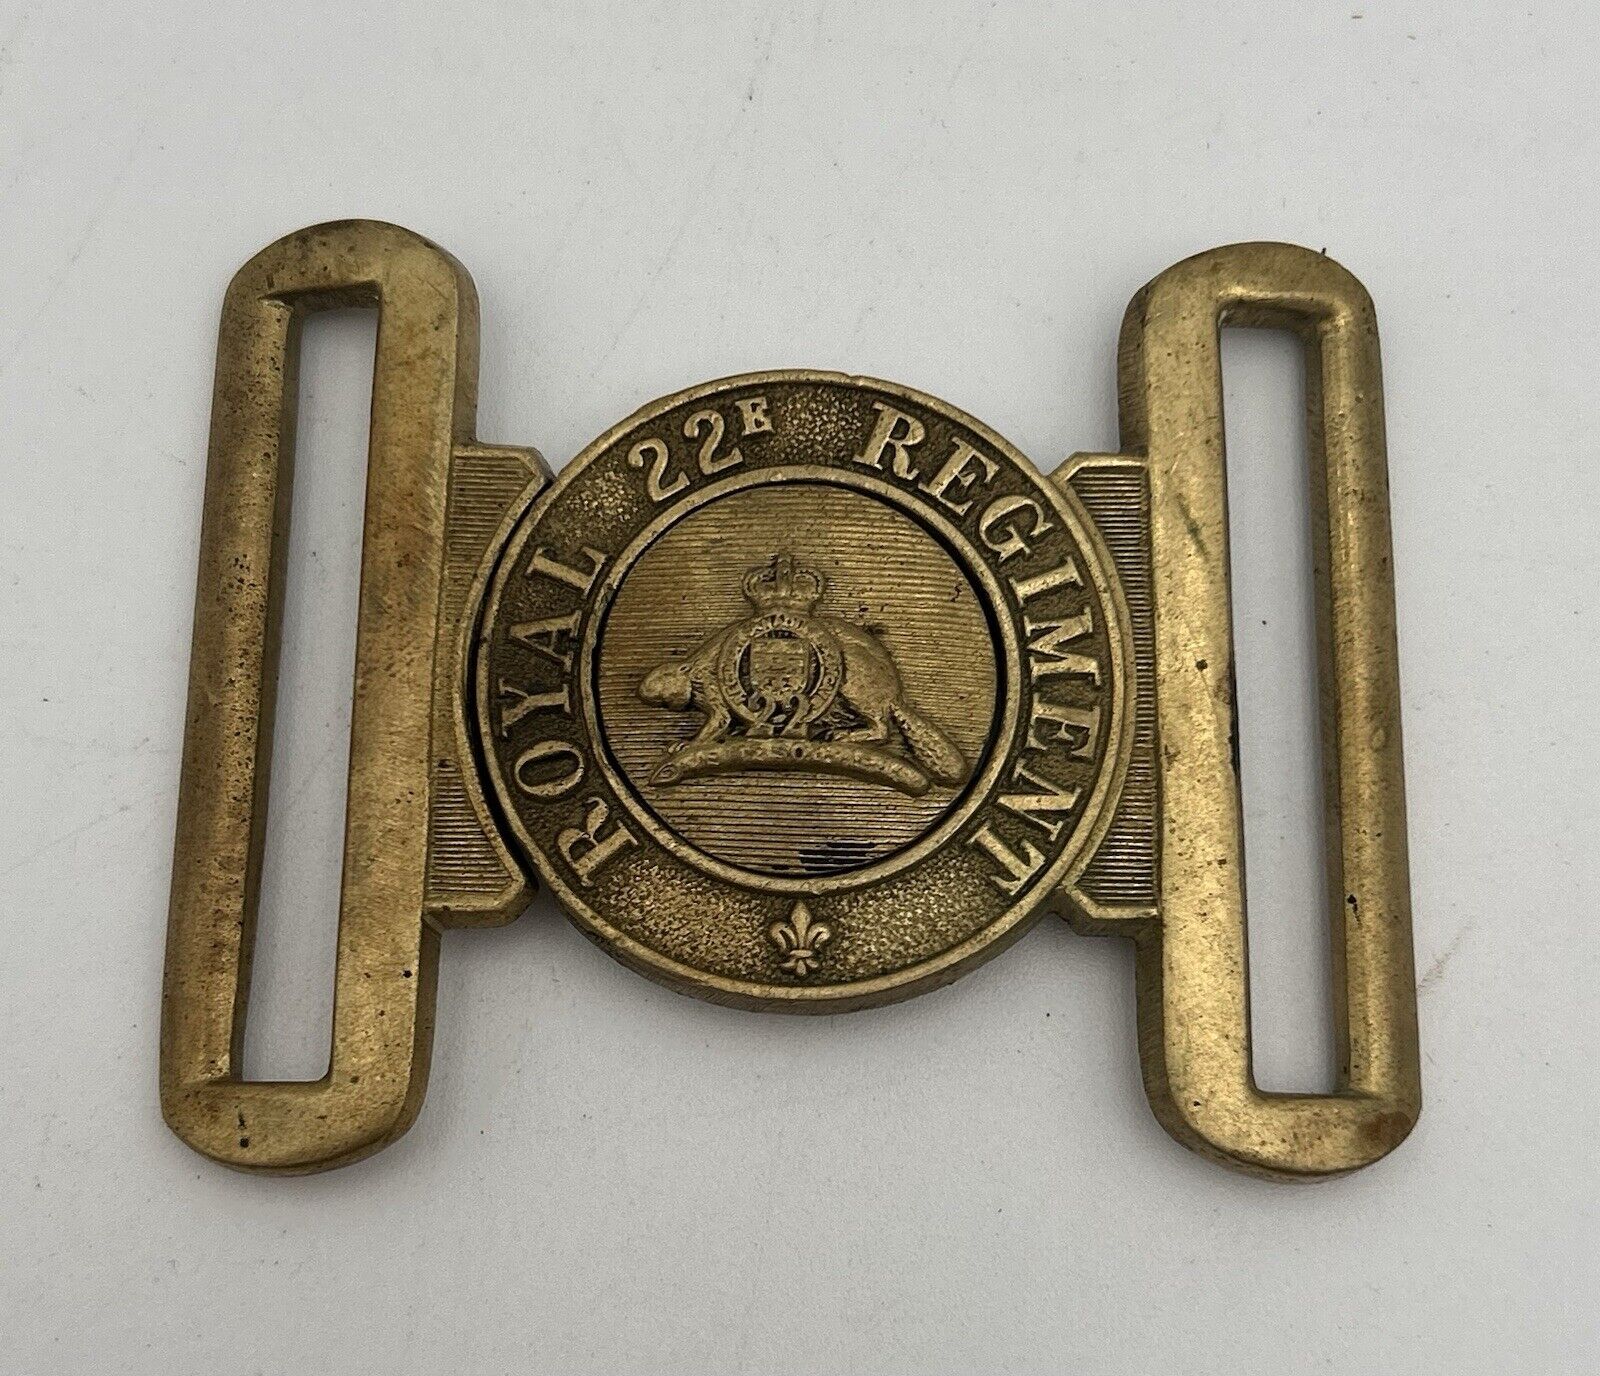 Antique 22nd Royal Regiment Belt Buckle Brass